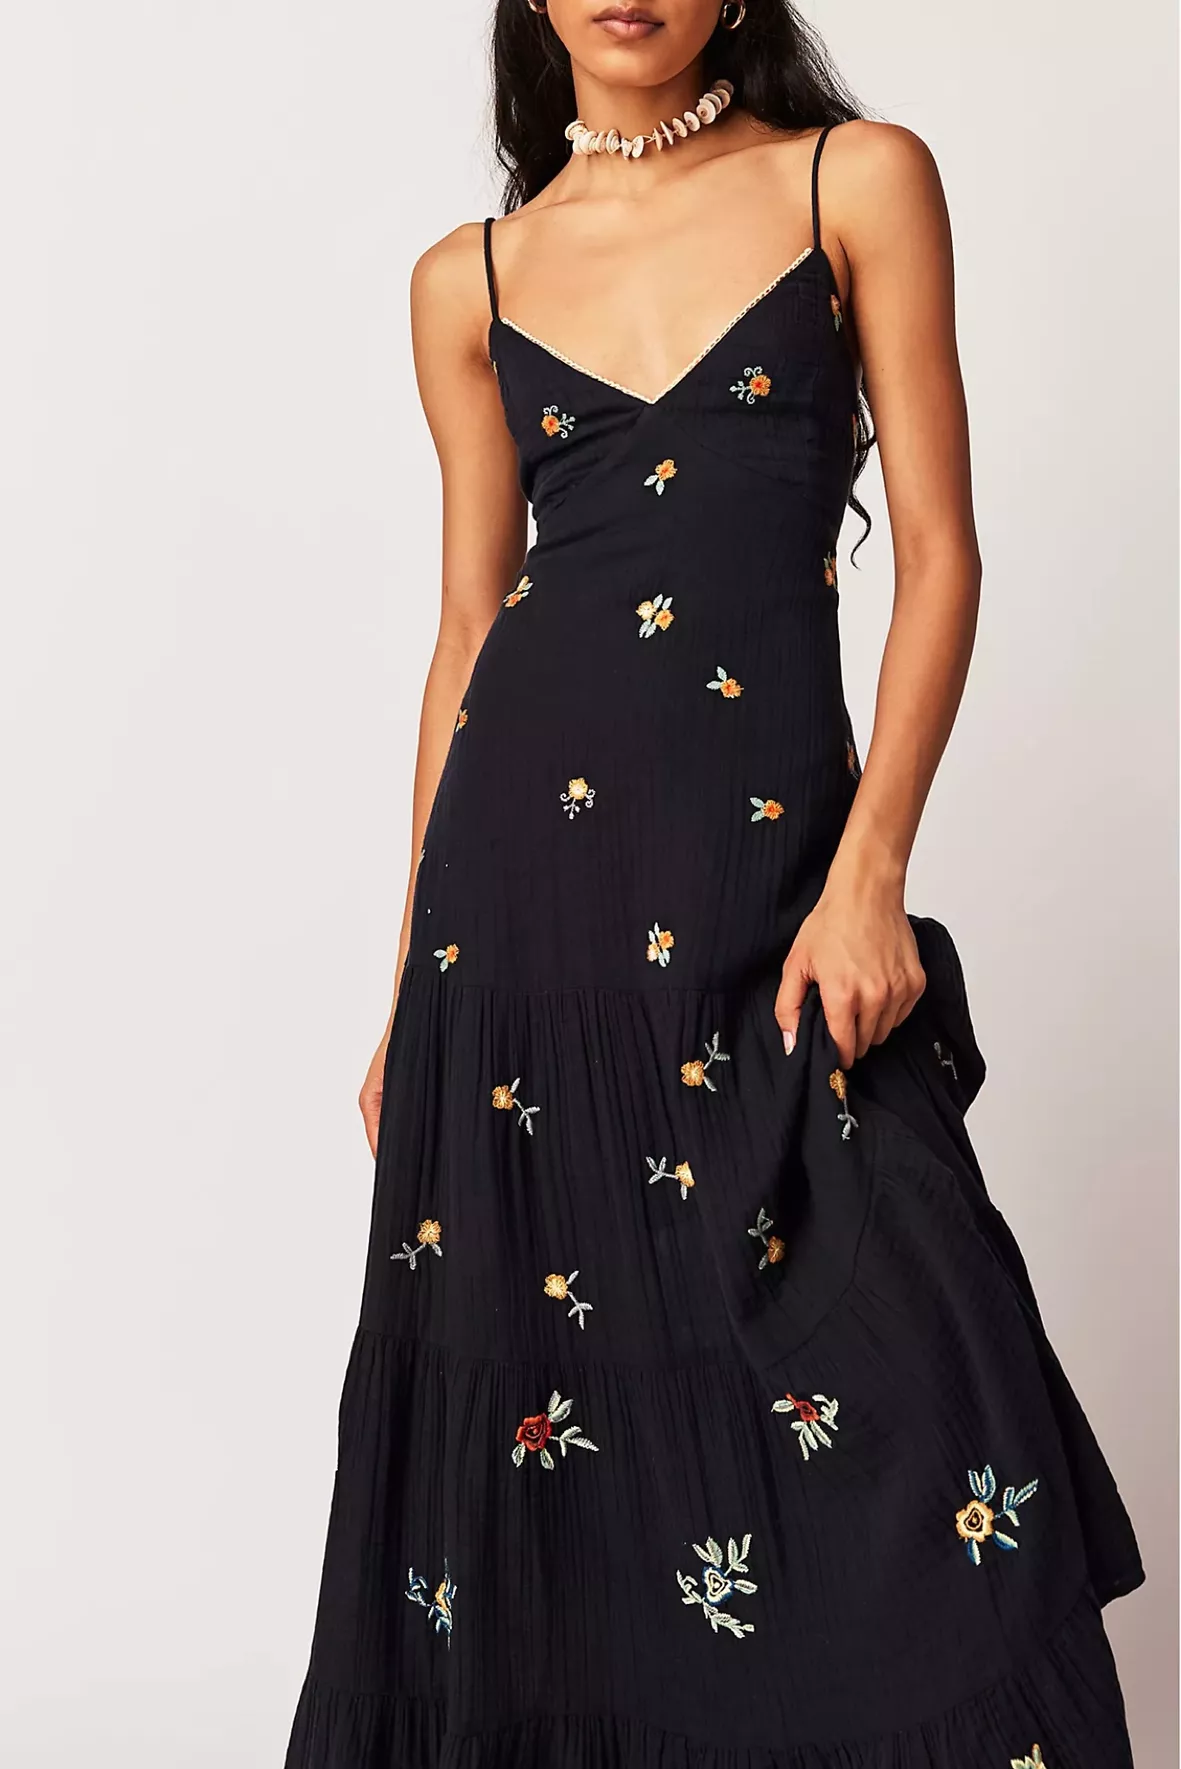 Black Summer Dresses, Black Floral & Beach Sundresses